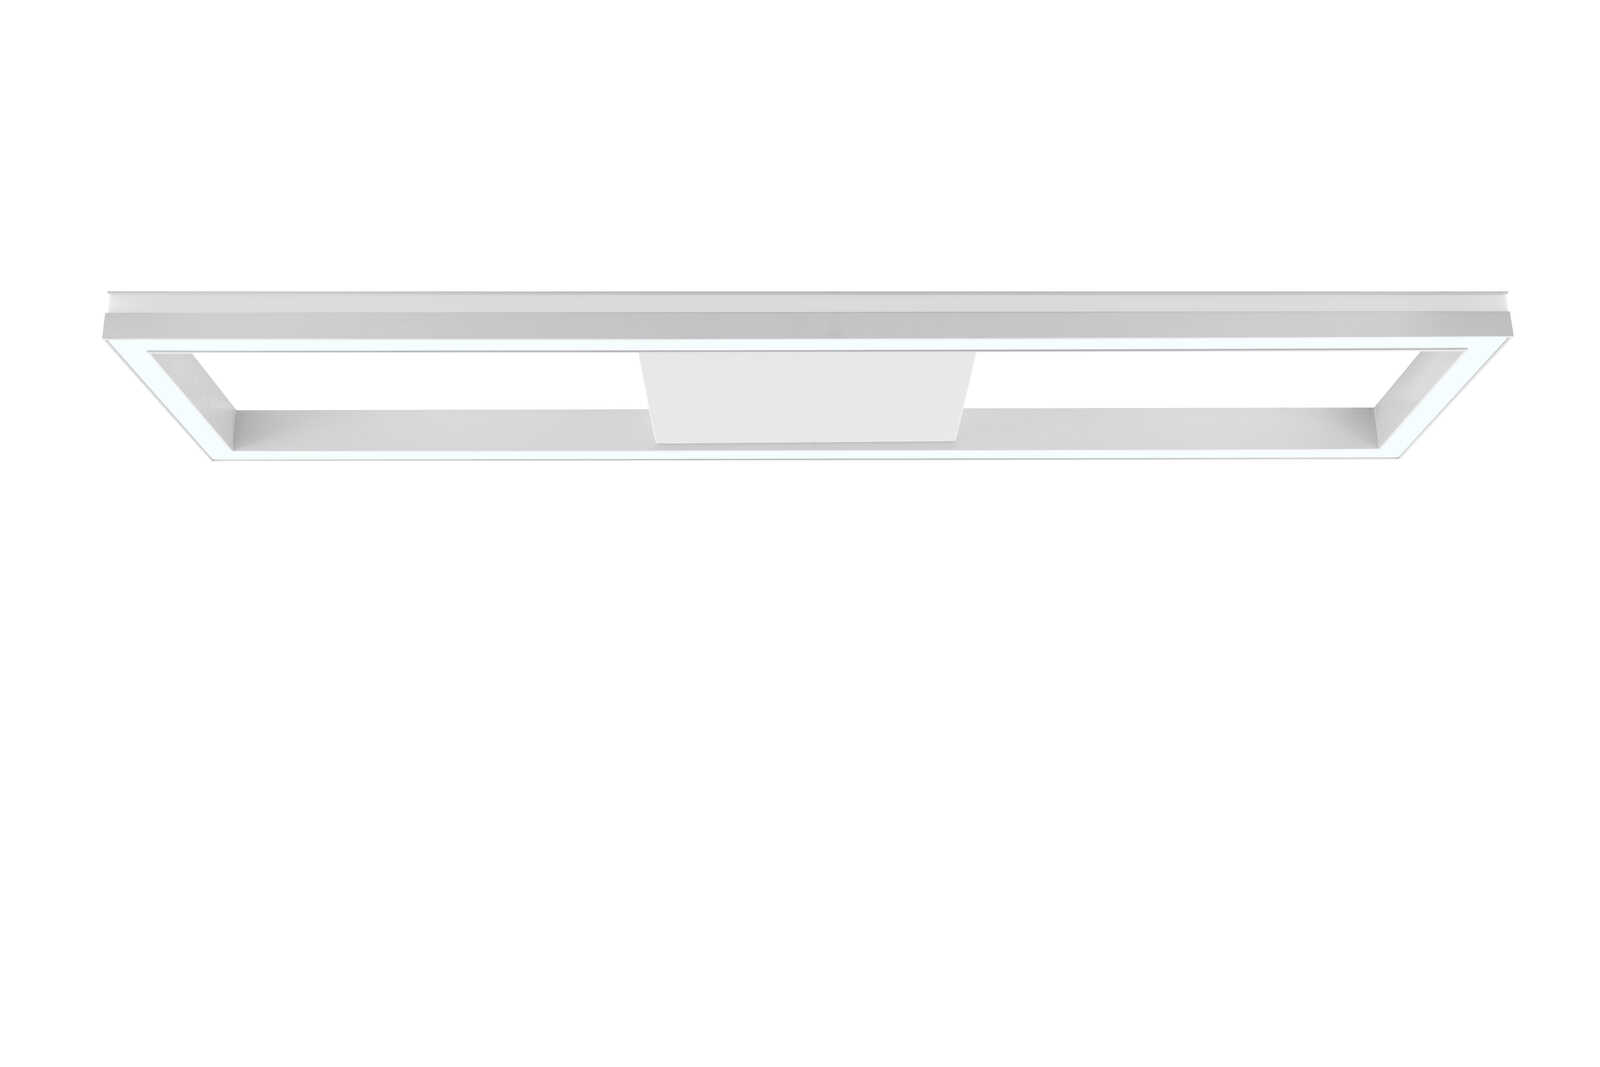             Kunststof wand- en plafondlamp - Janis 5 - Wit
        